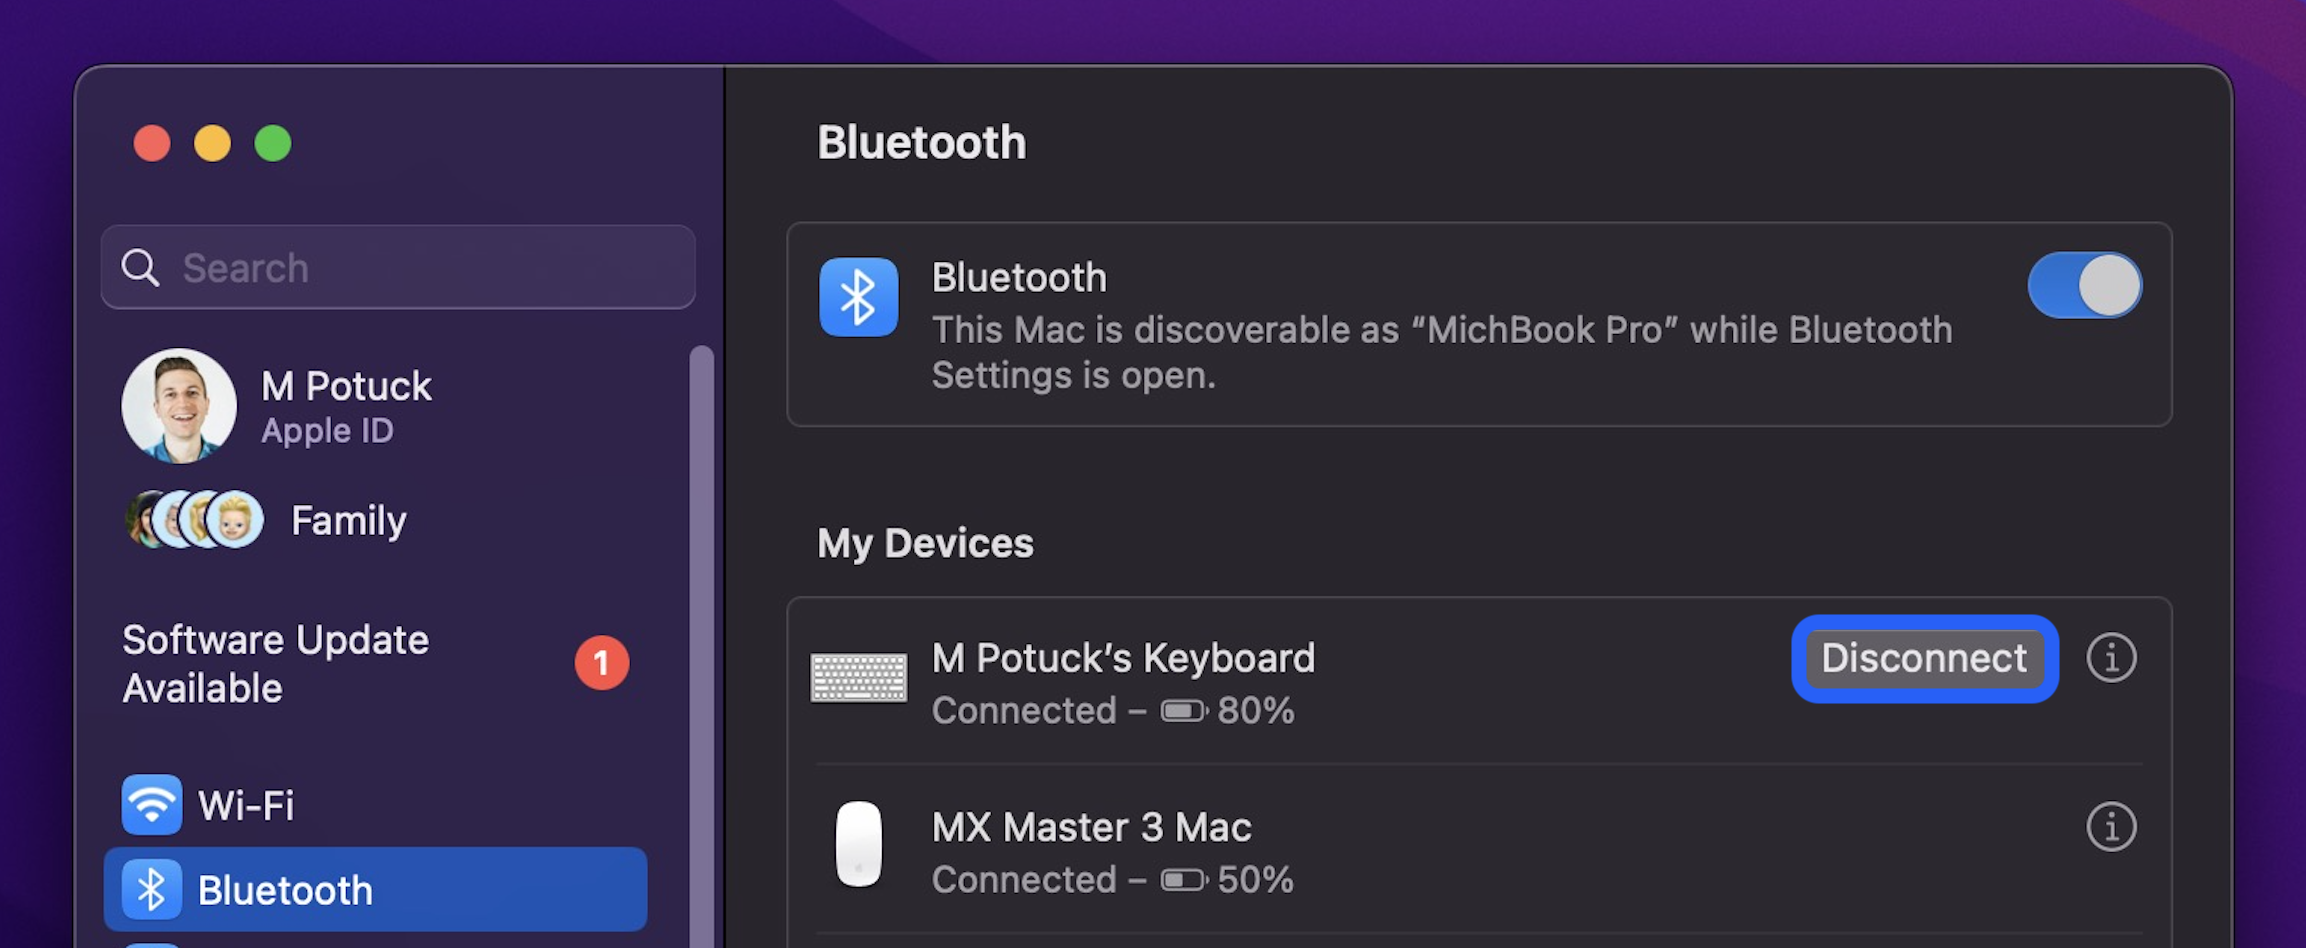 fix bluetooth issues mac walkthrough